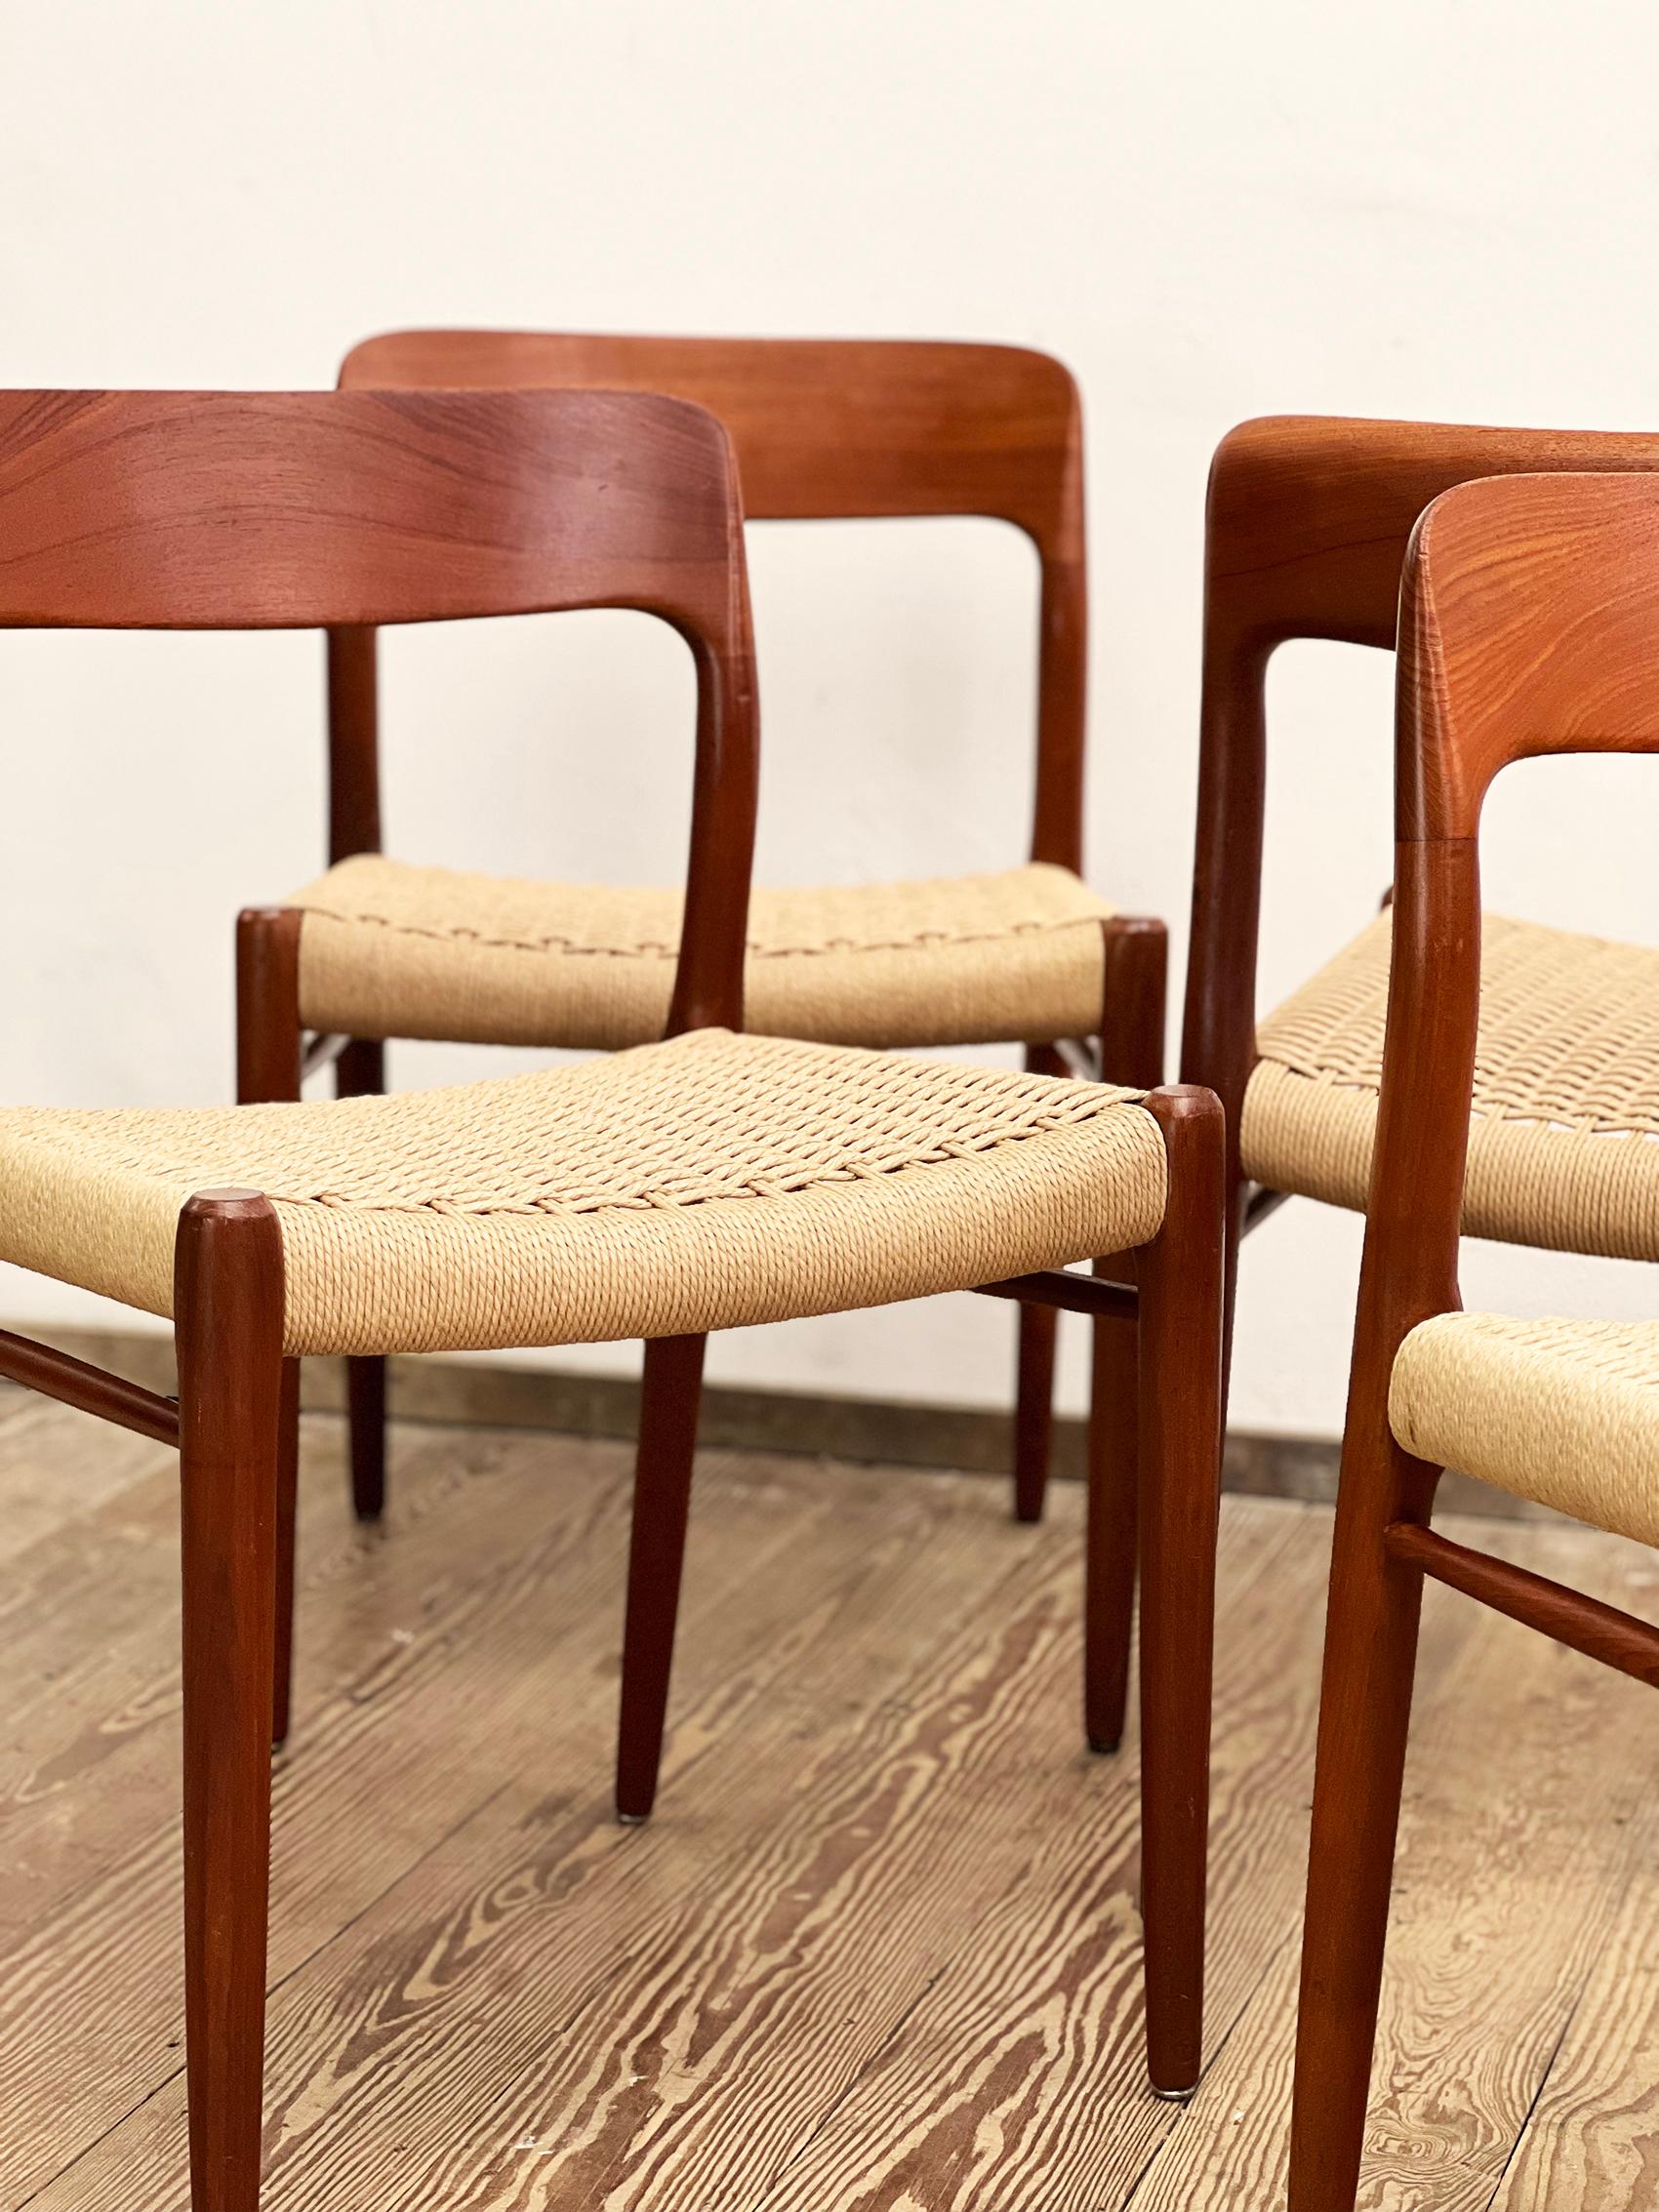 4 Midcentury Dining Chairs #75 in Teak, Danish Design, Niels Møller, J.L. Moller 3